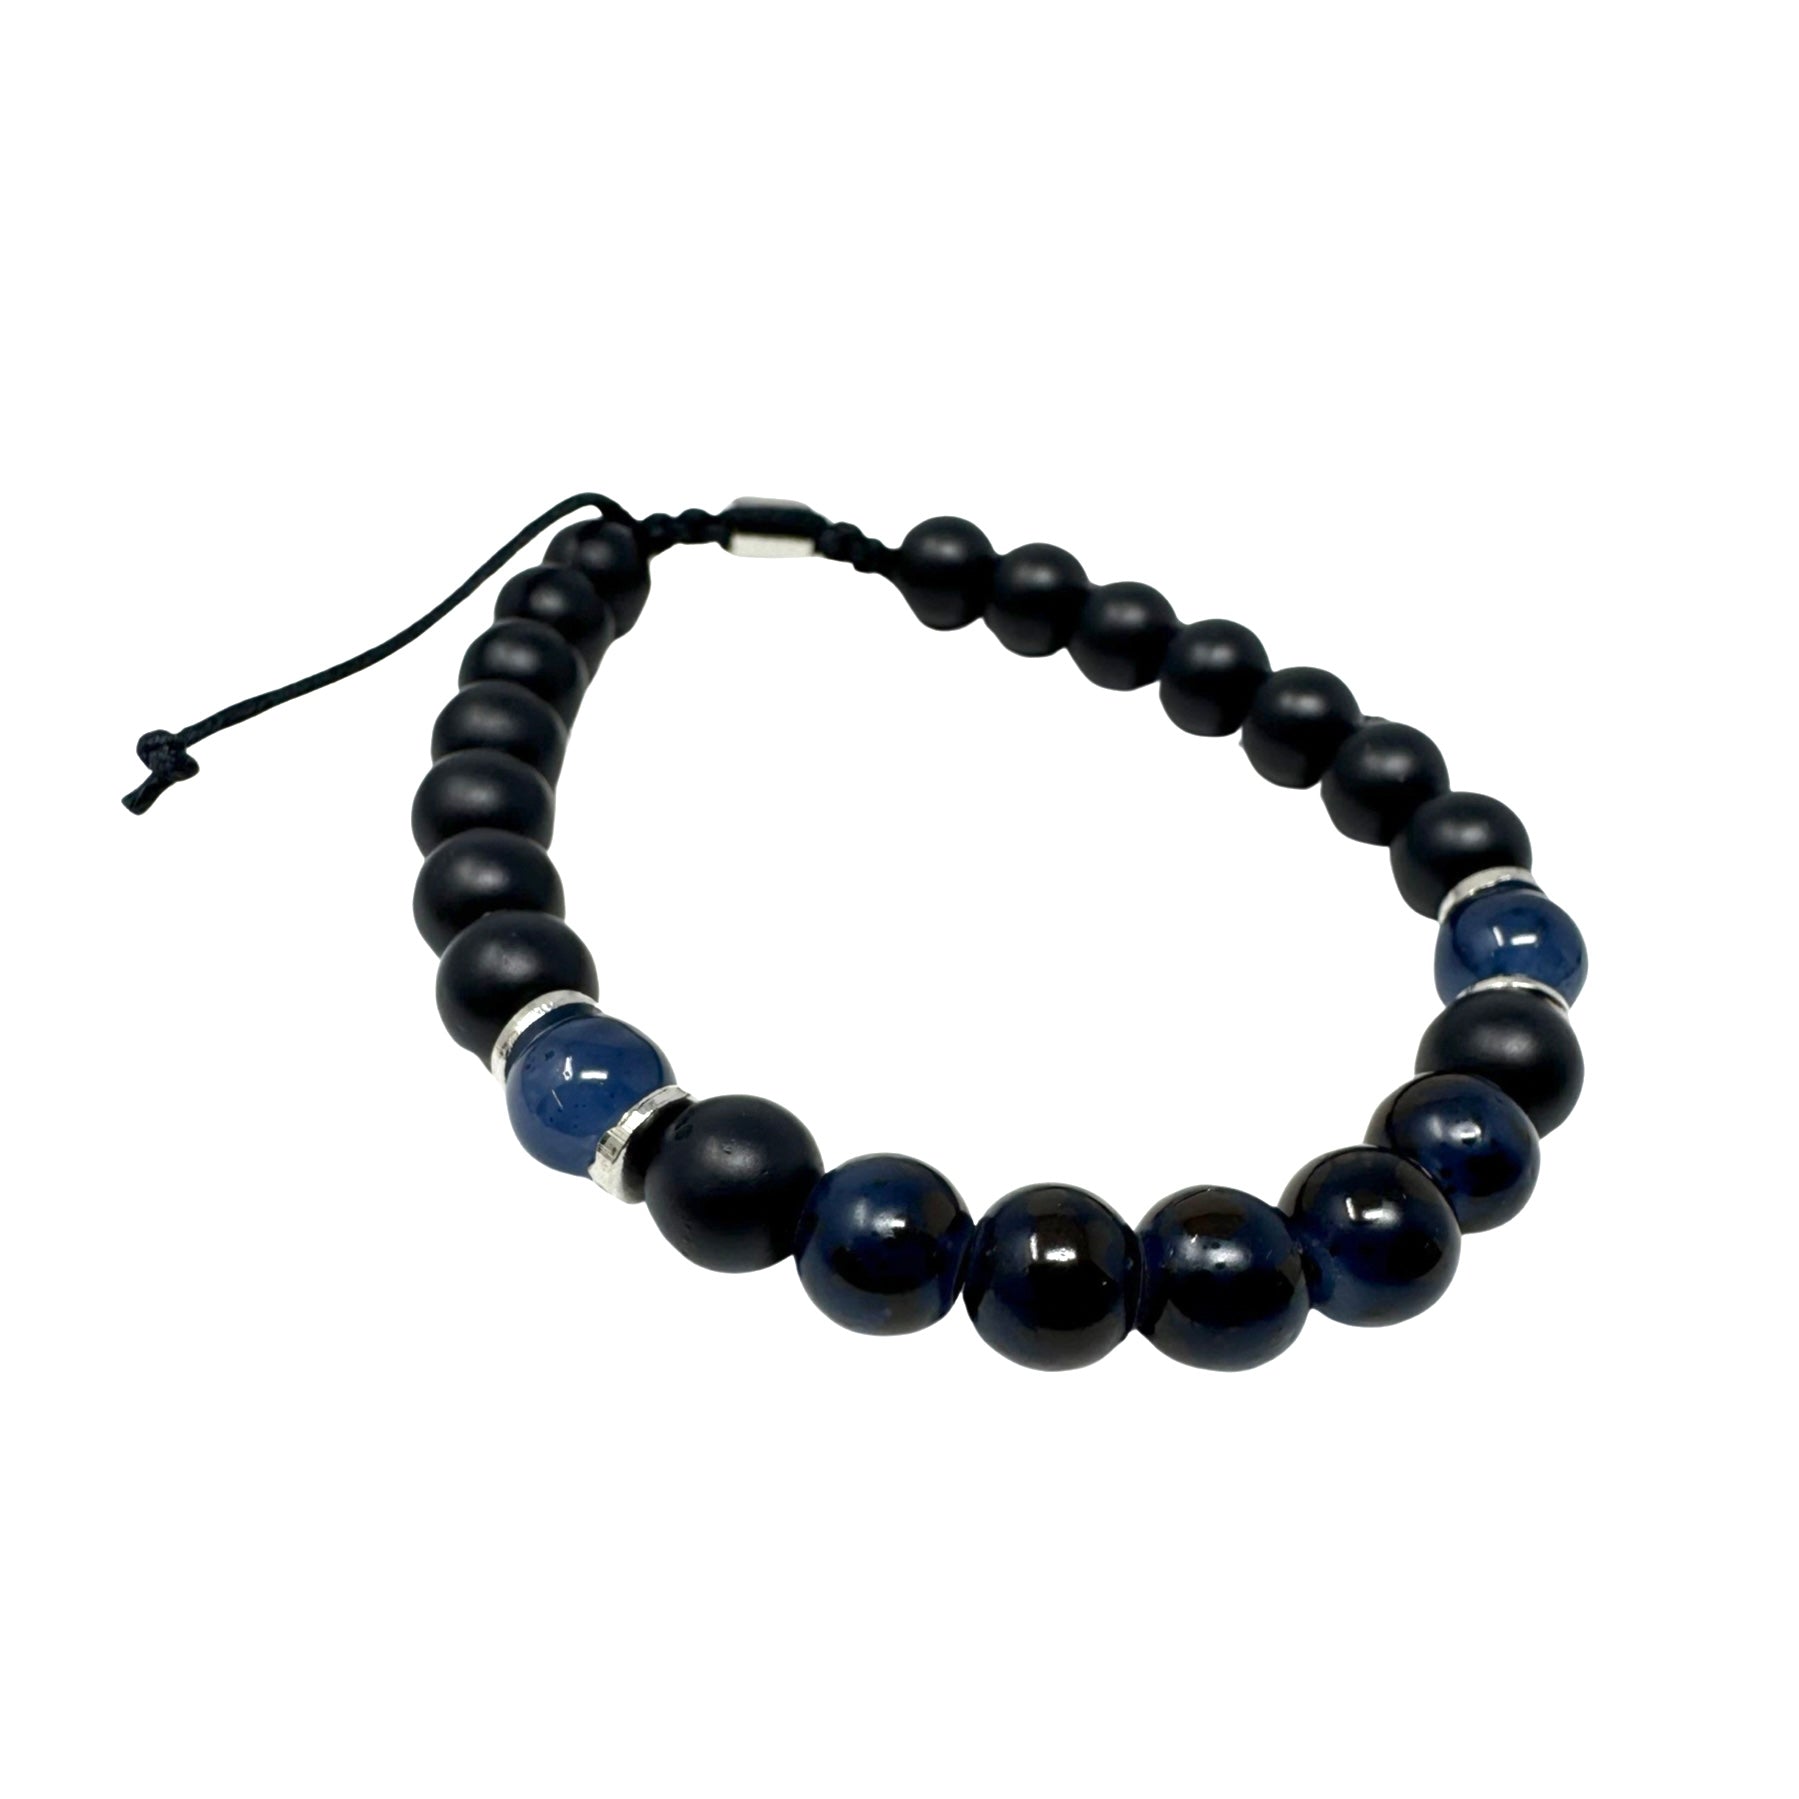 Black and Blue Mixed Stone Bead Bracelet